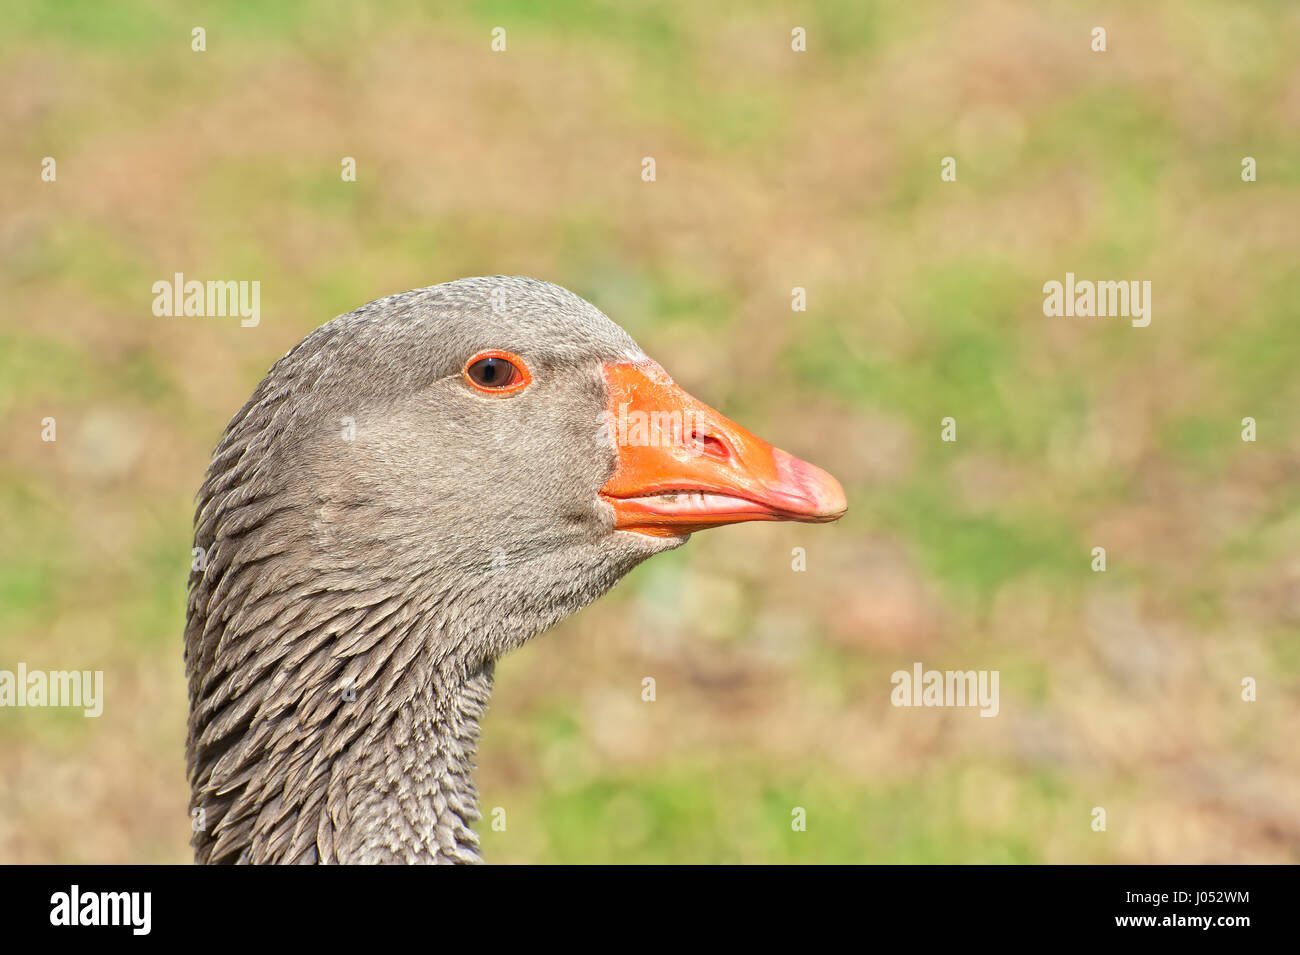 Portrait of Greylag Goose. Domestic goose. Stock Photo